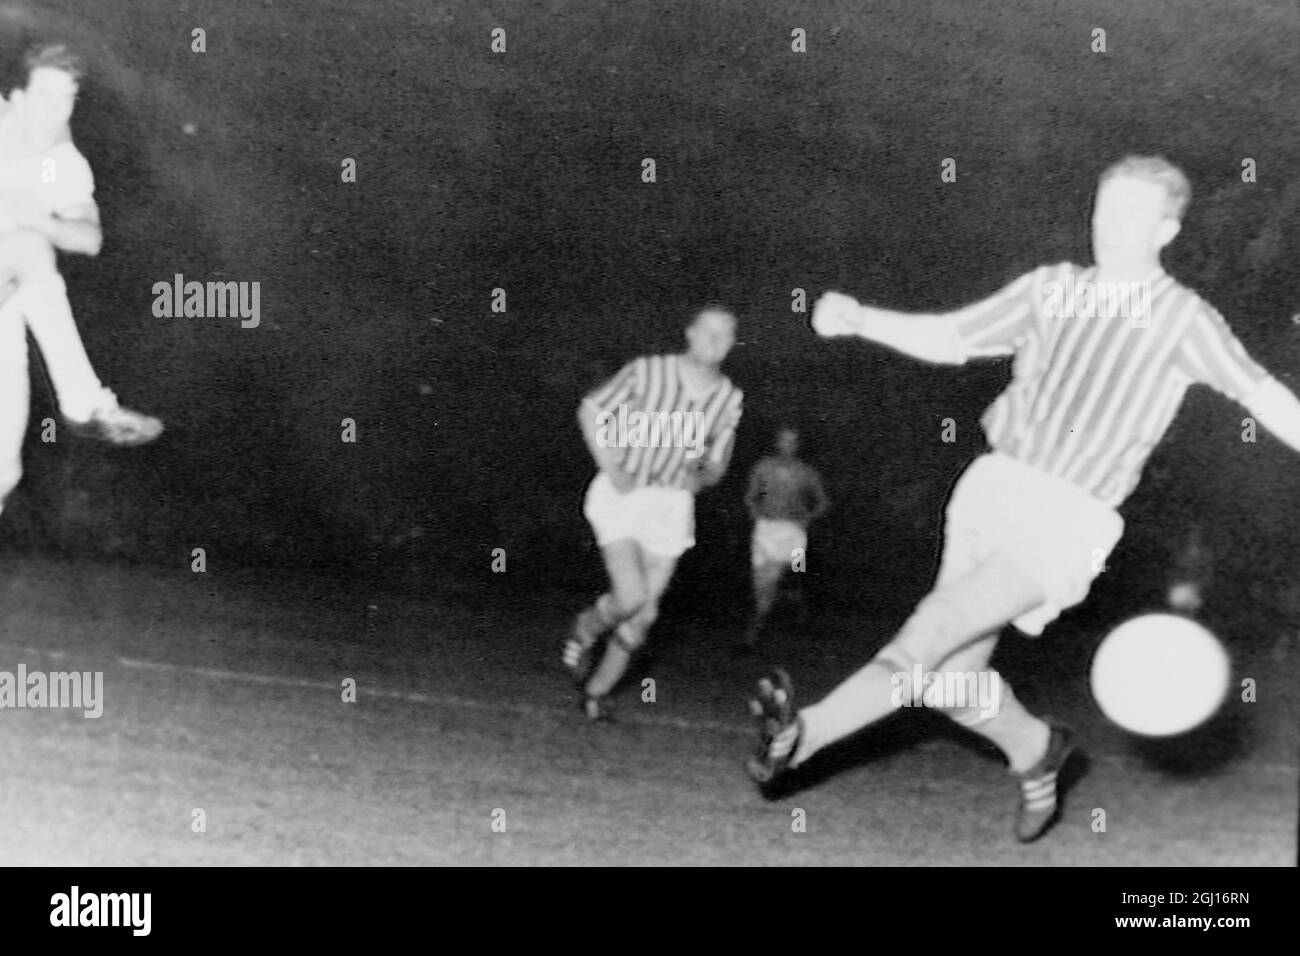 AUGUSTO JOSE IN AKTION - FUSSBALL-EUROPAMEISTERSCHAFT FEYENOORD V BENFICA LISSABON 9. MAI 1963 Stockfoto